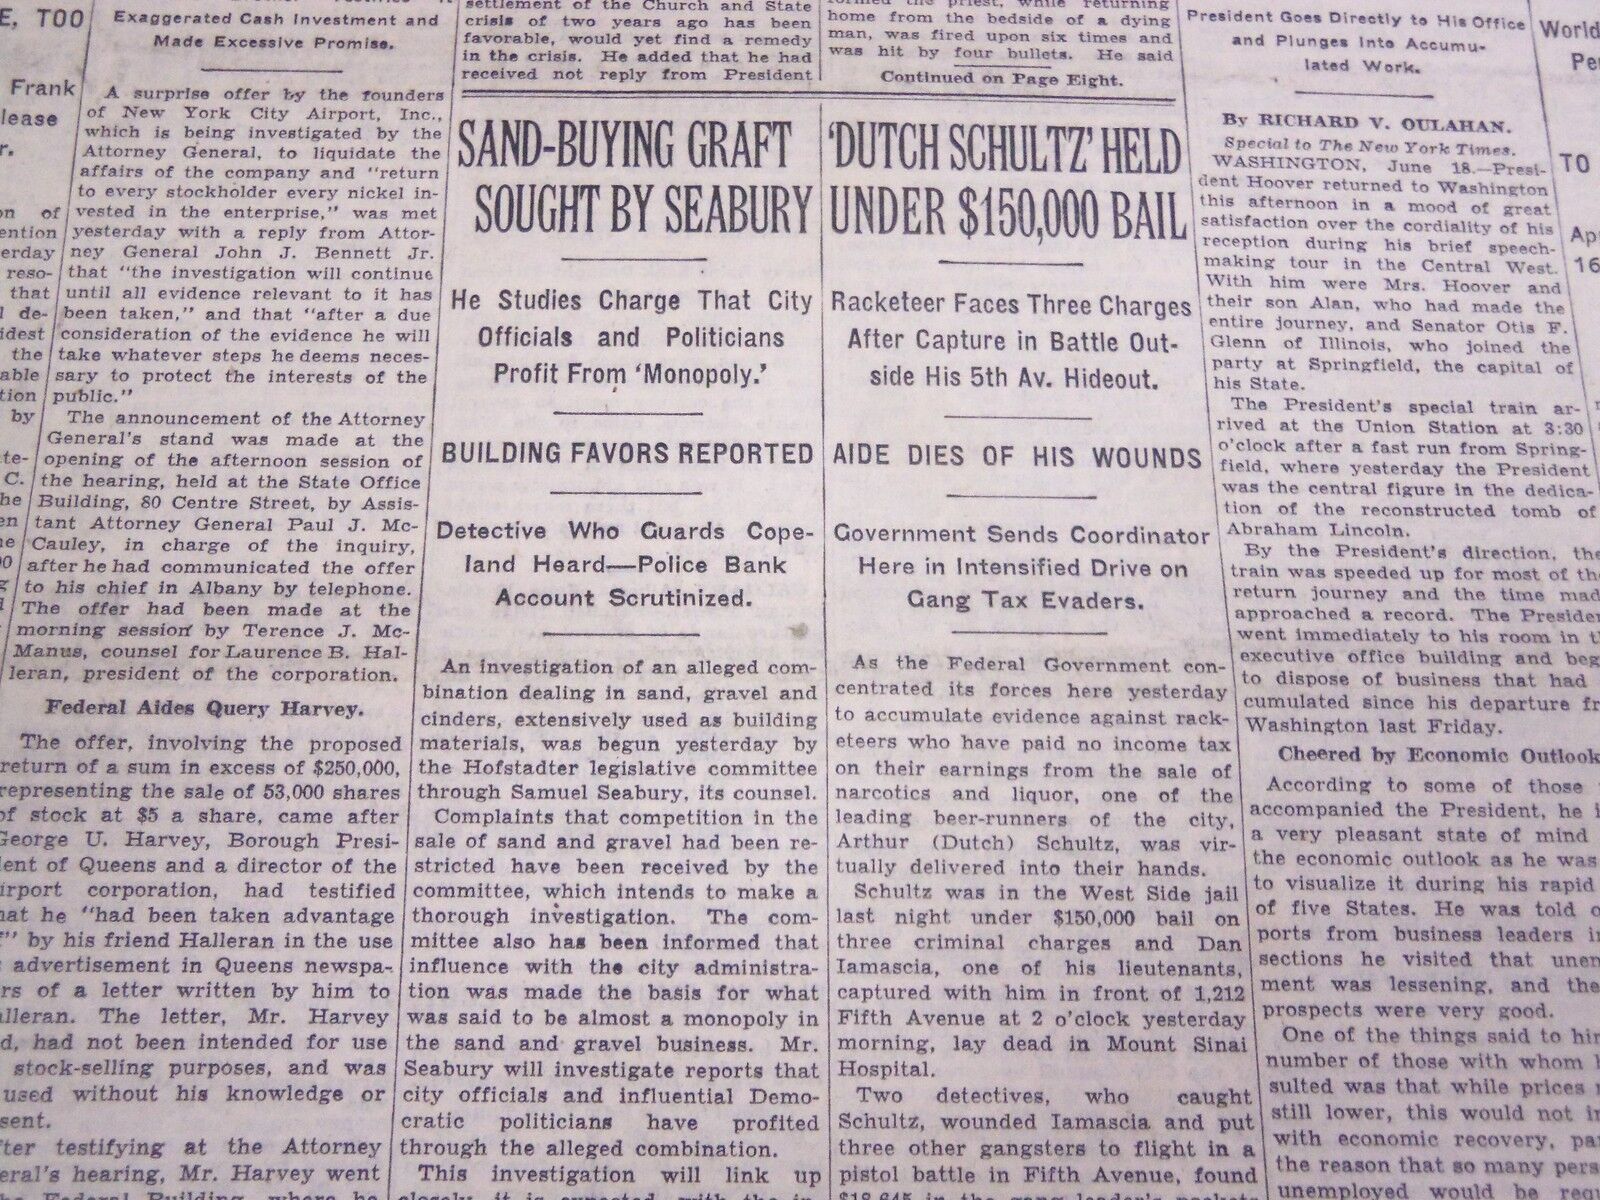 1931 JUNE 19 NEW YORK TIMES - DUTCH SCHULTZ $150,000 BAIL - NT 3960